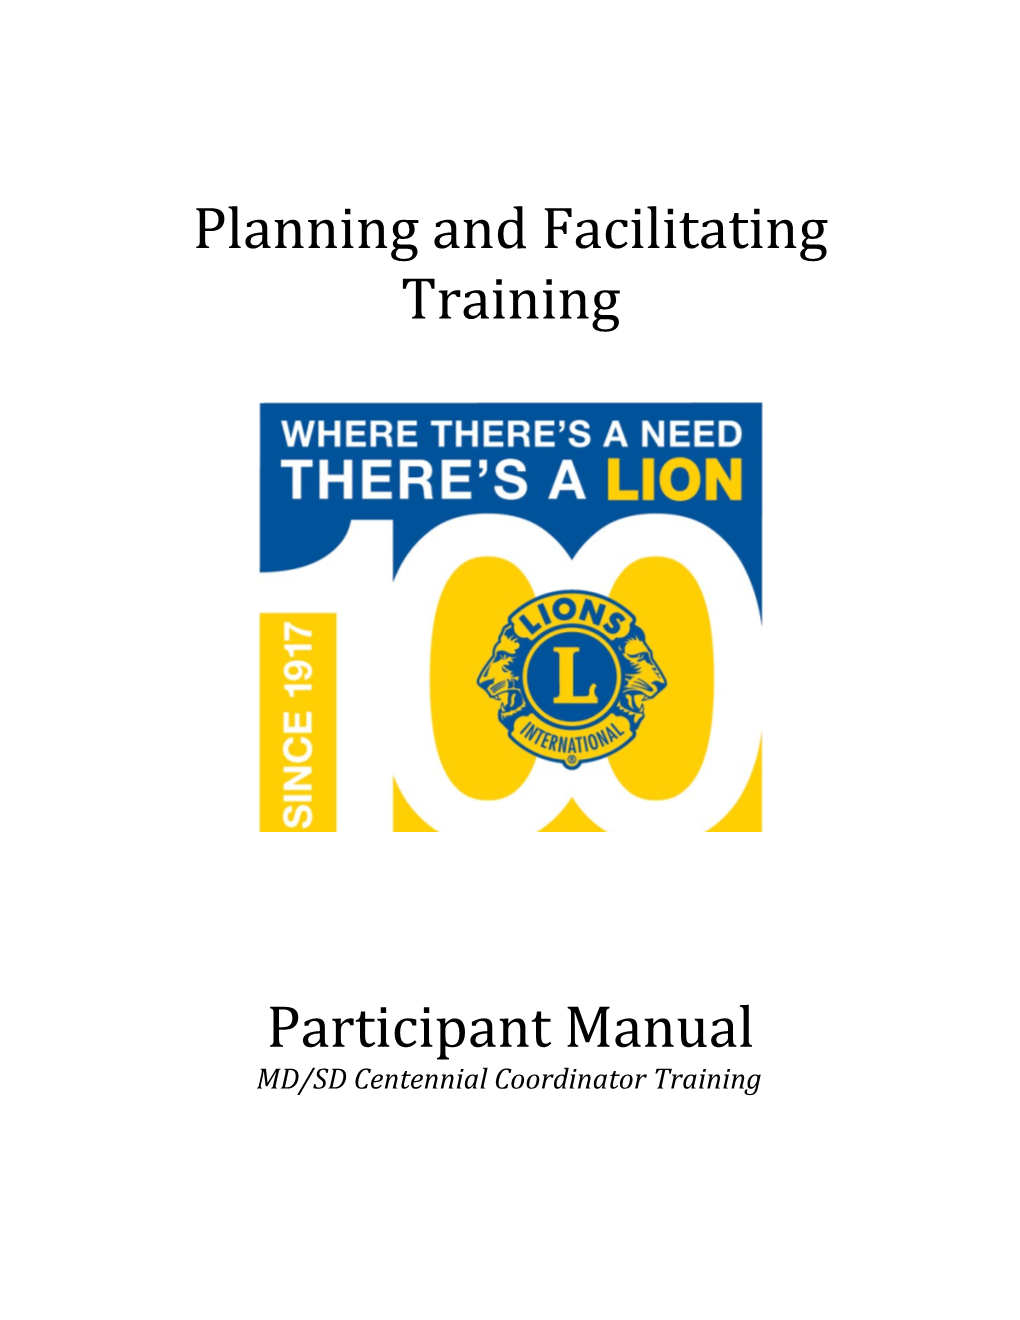 Planning and Facilitating Training